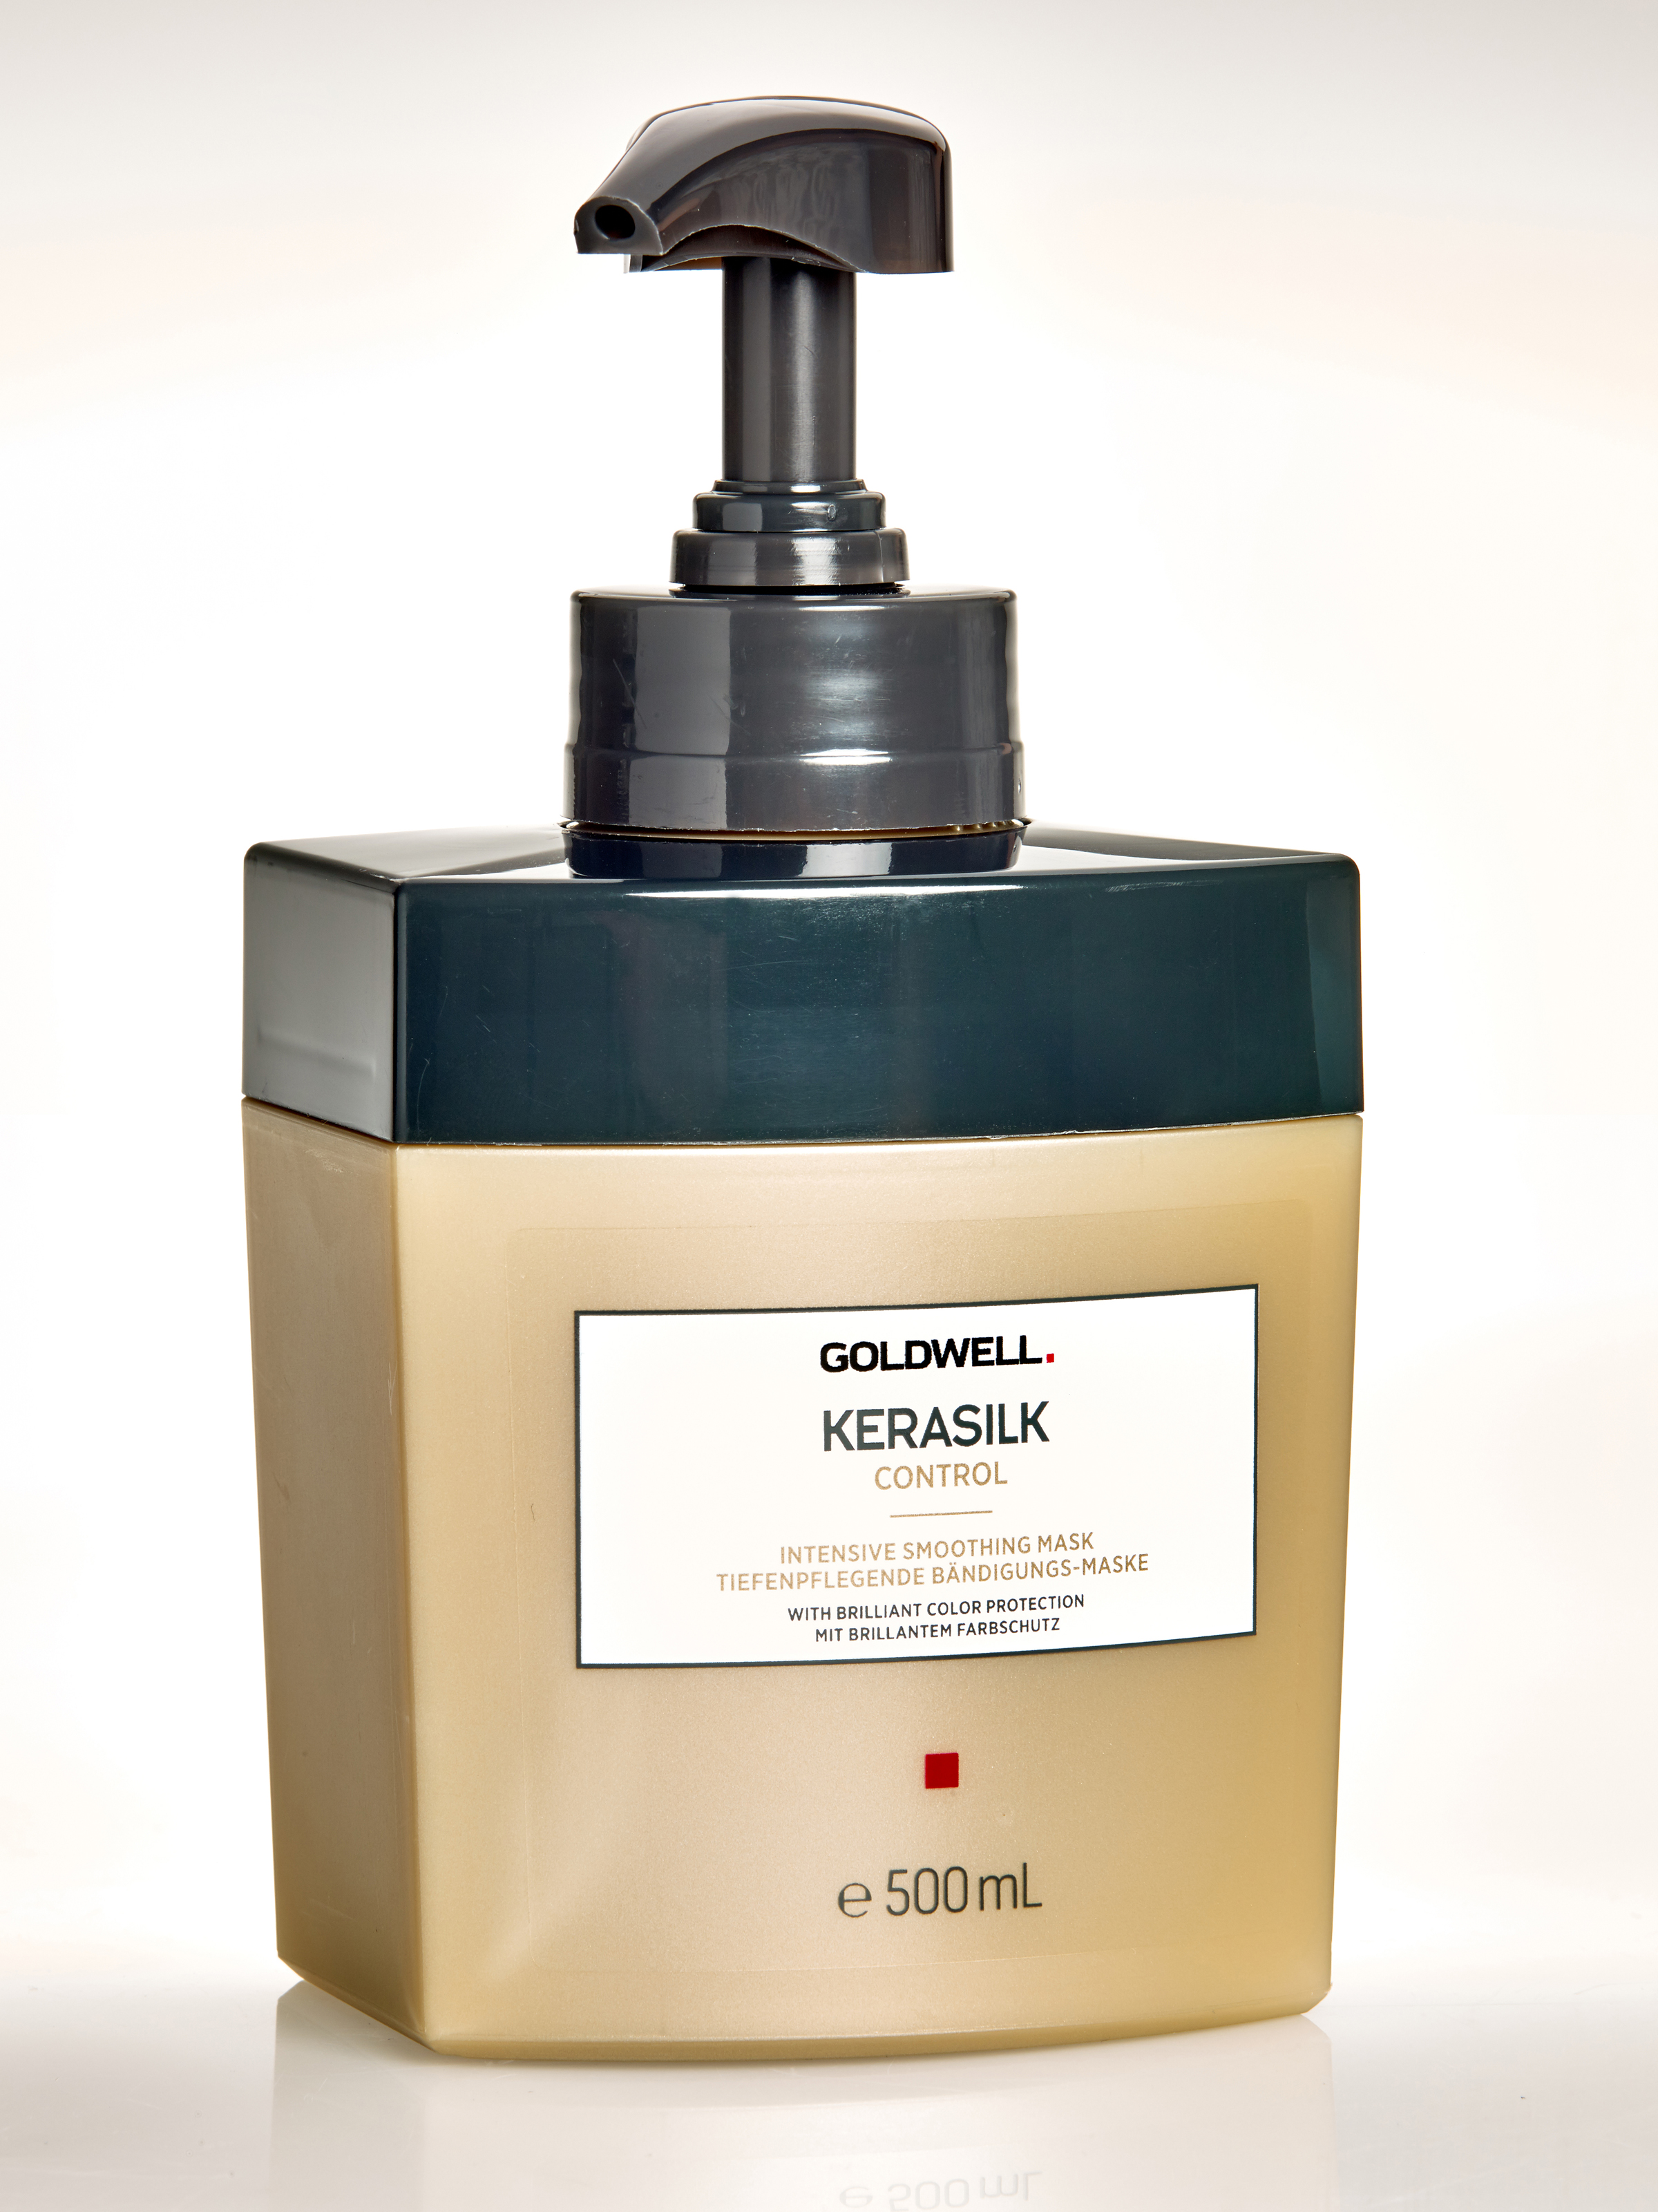 New Kerasilk Hair Care Product Range by Goldwell Kao